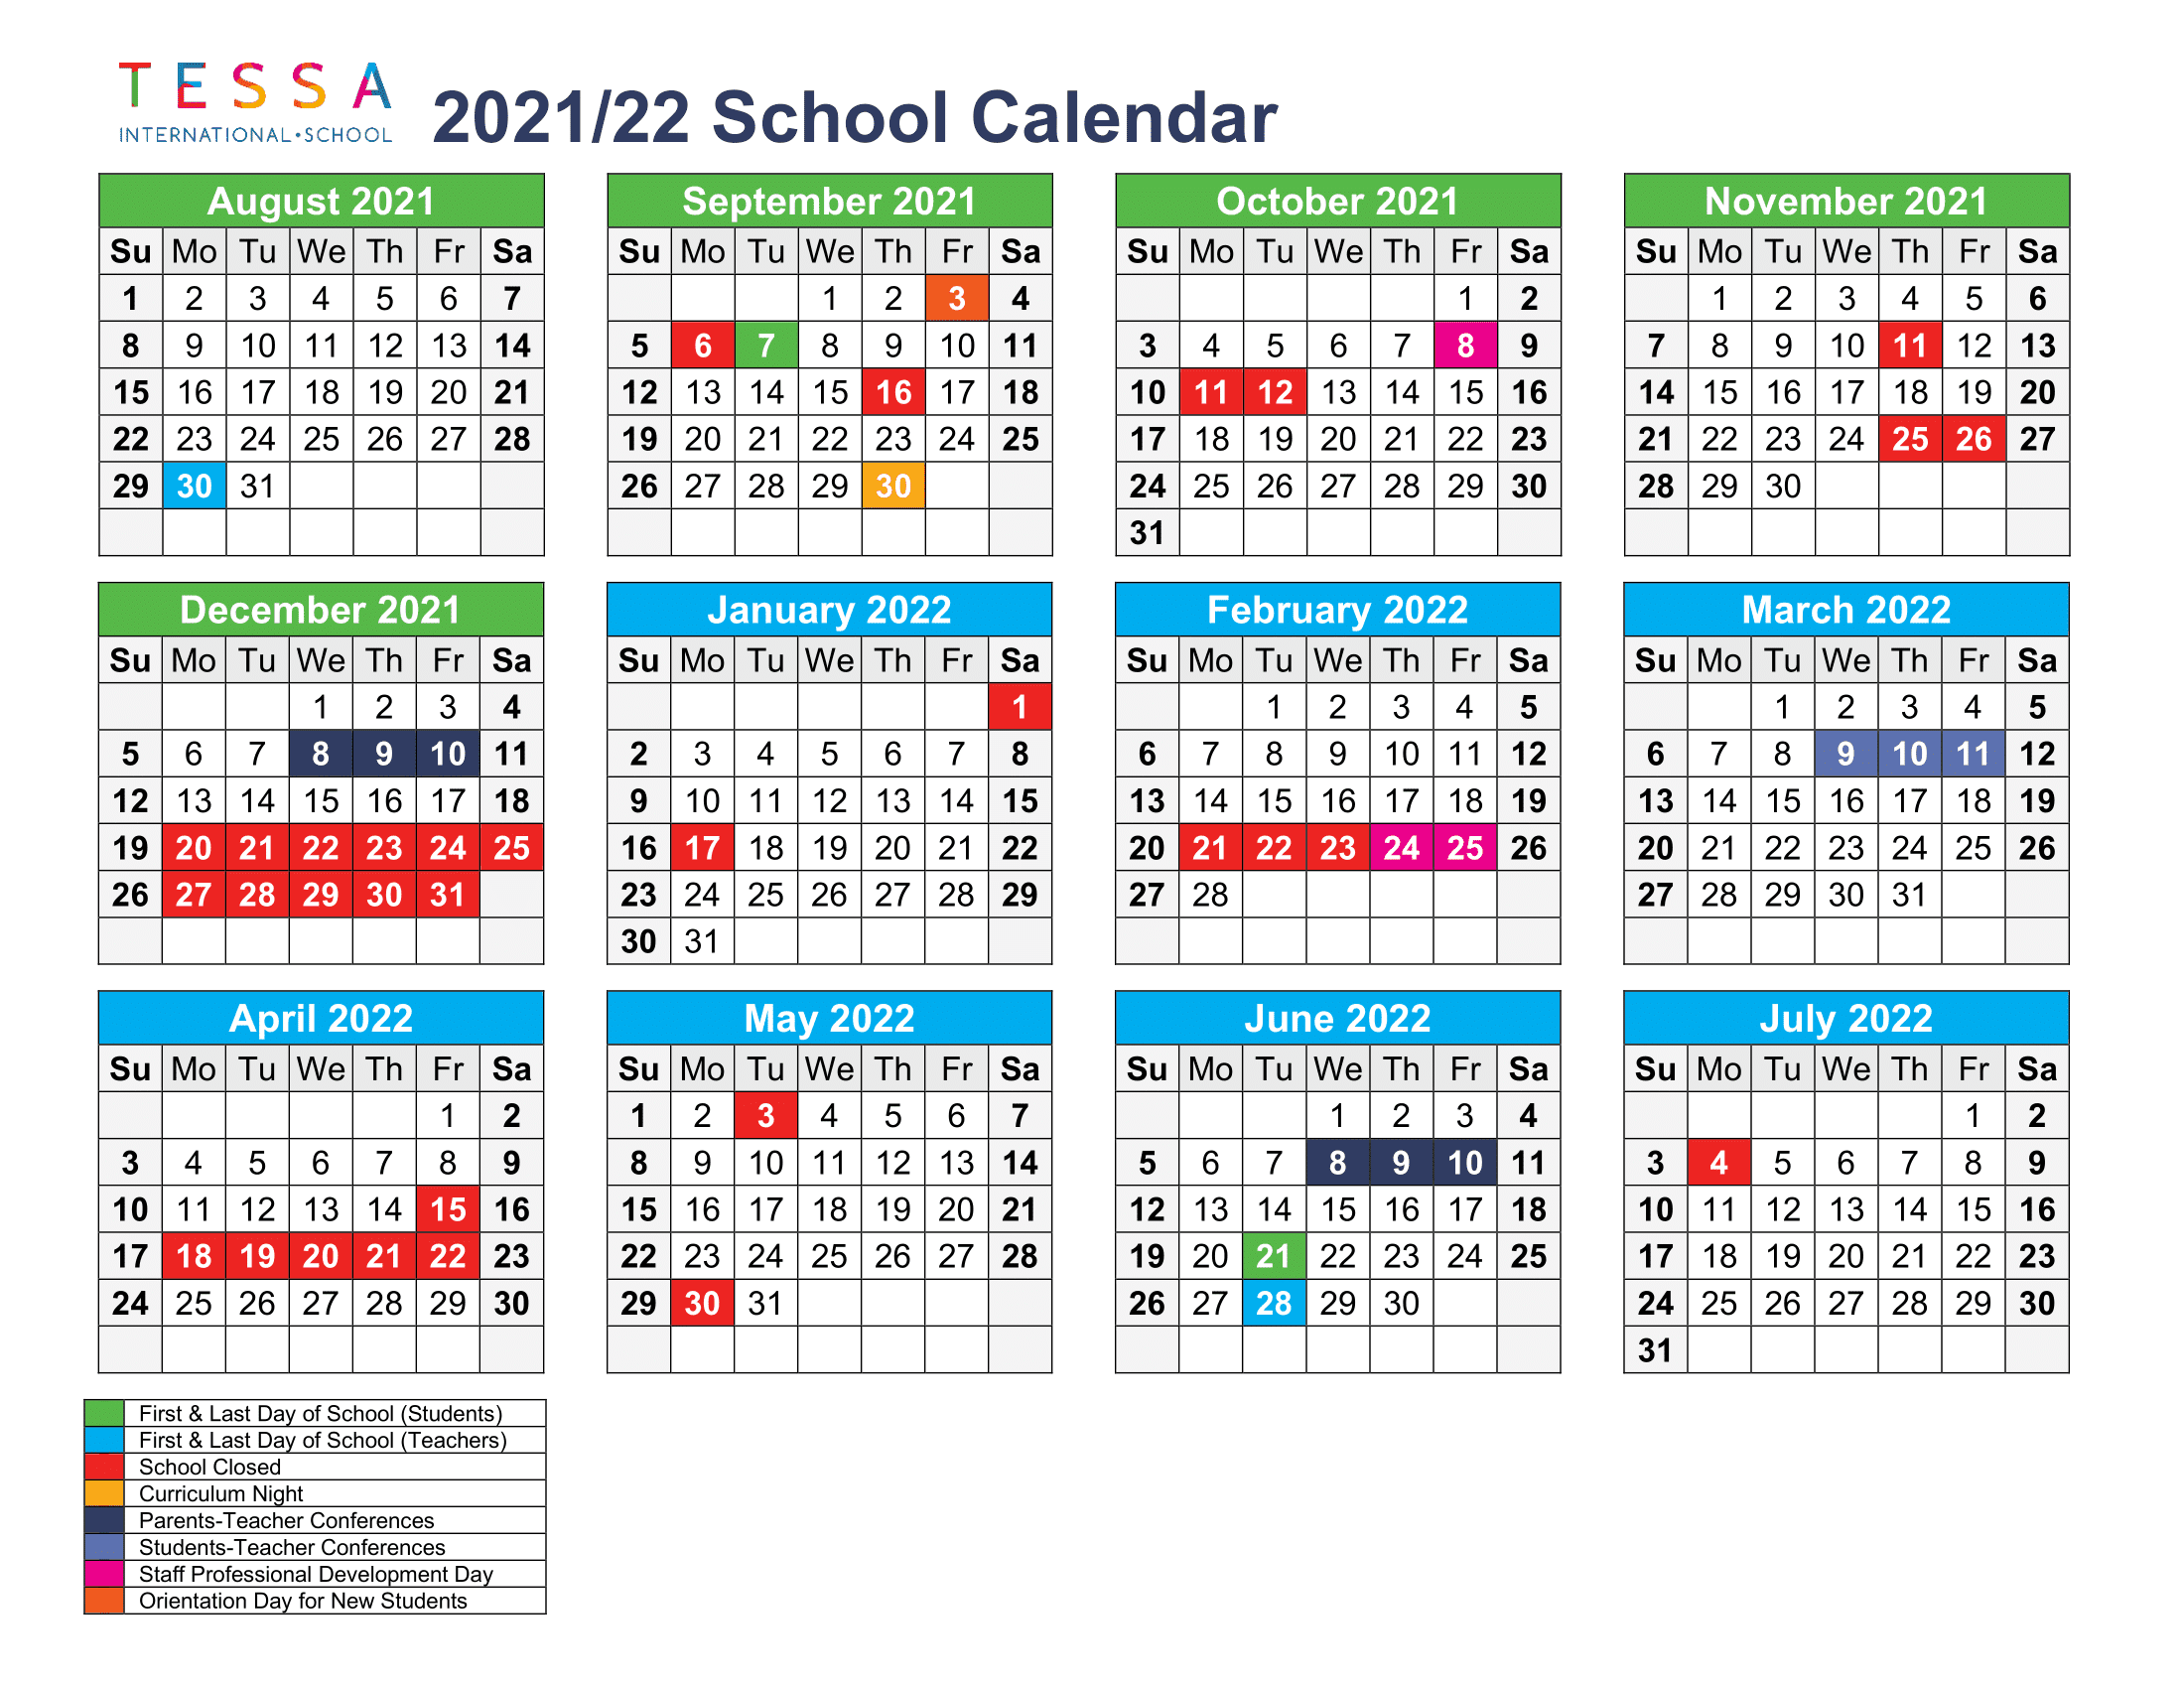 Njit Academic Calendar 2022 Academic-Calendar-2021-2022-1 - Tessa International School